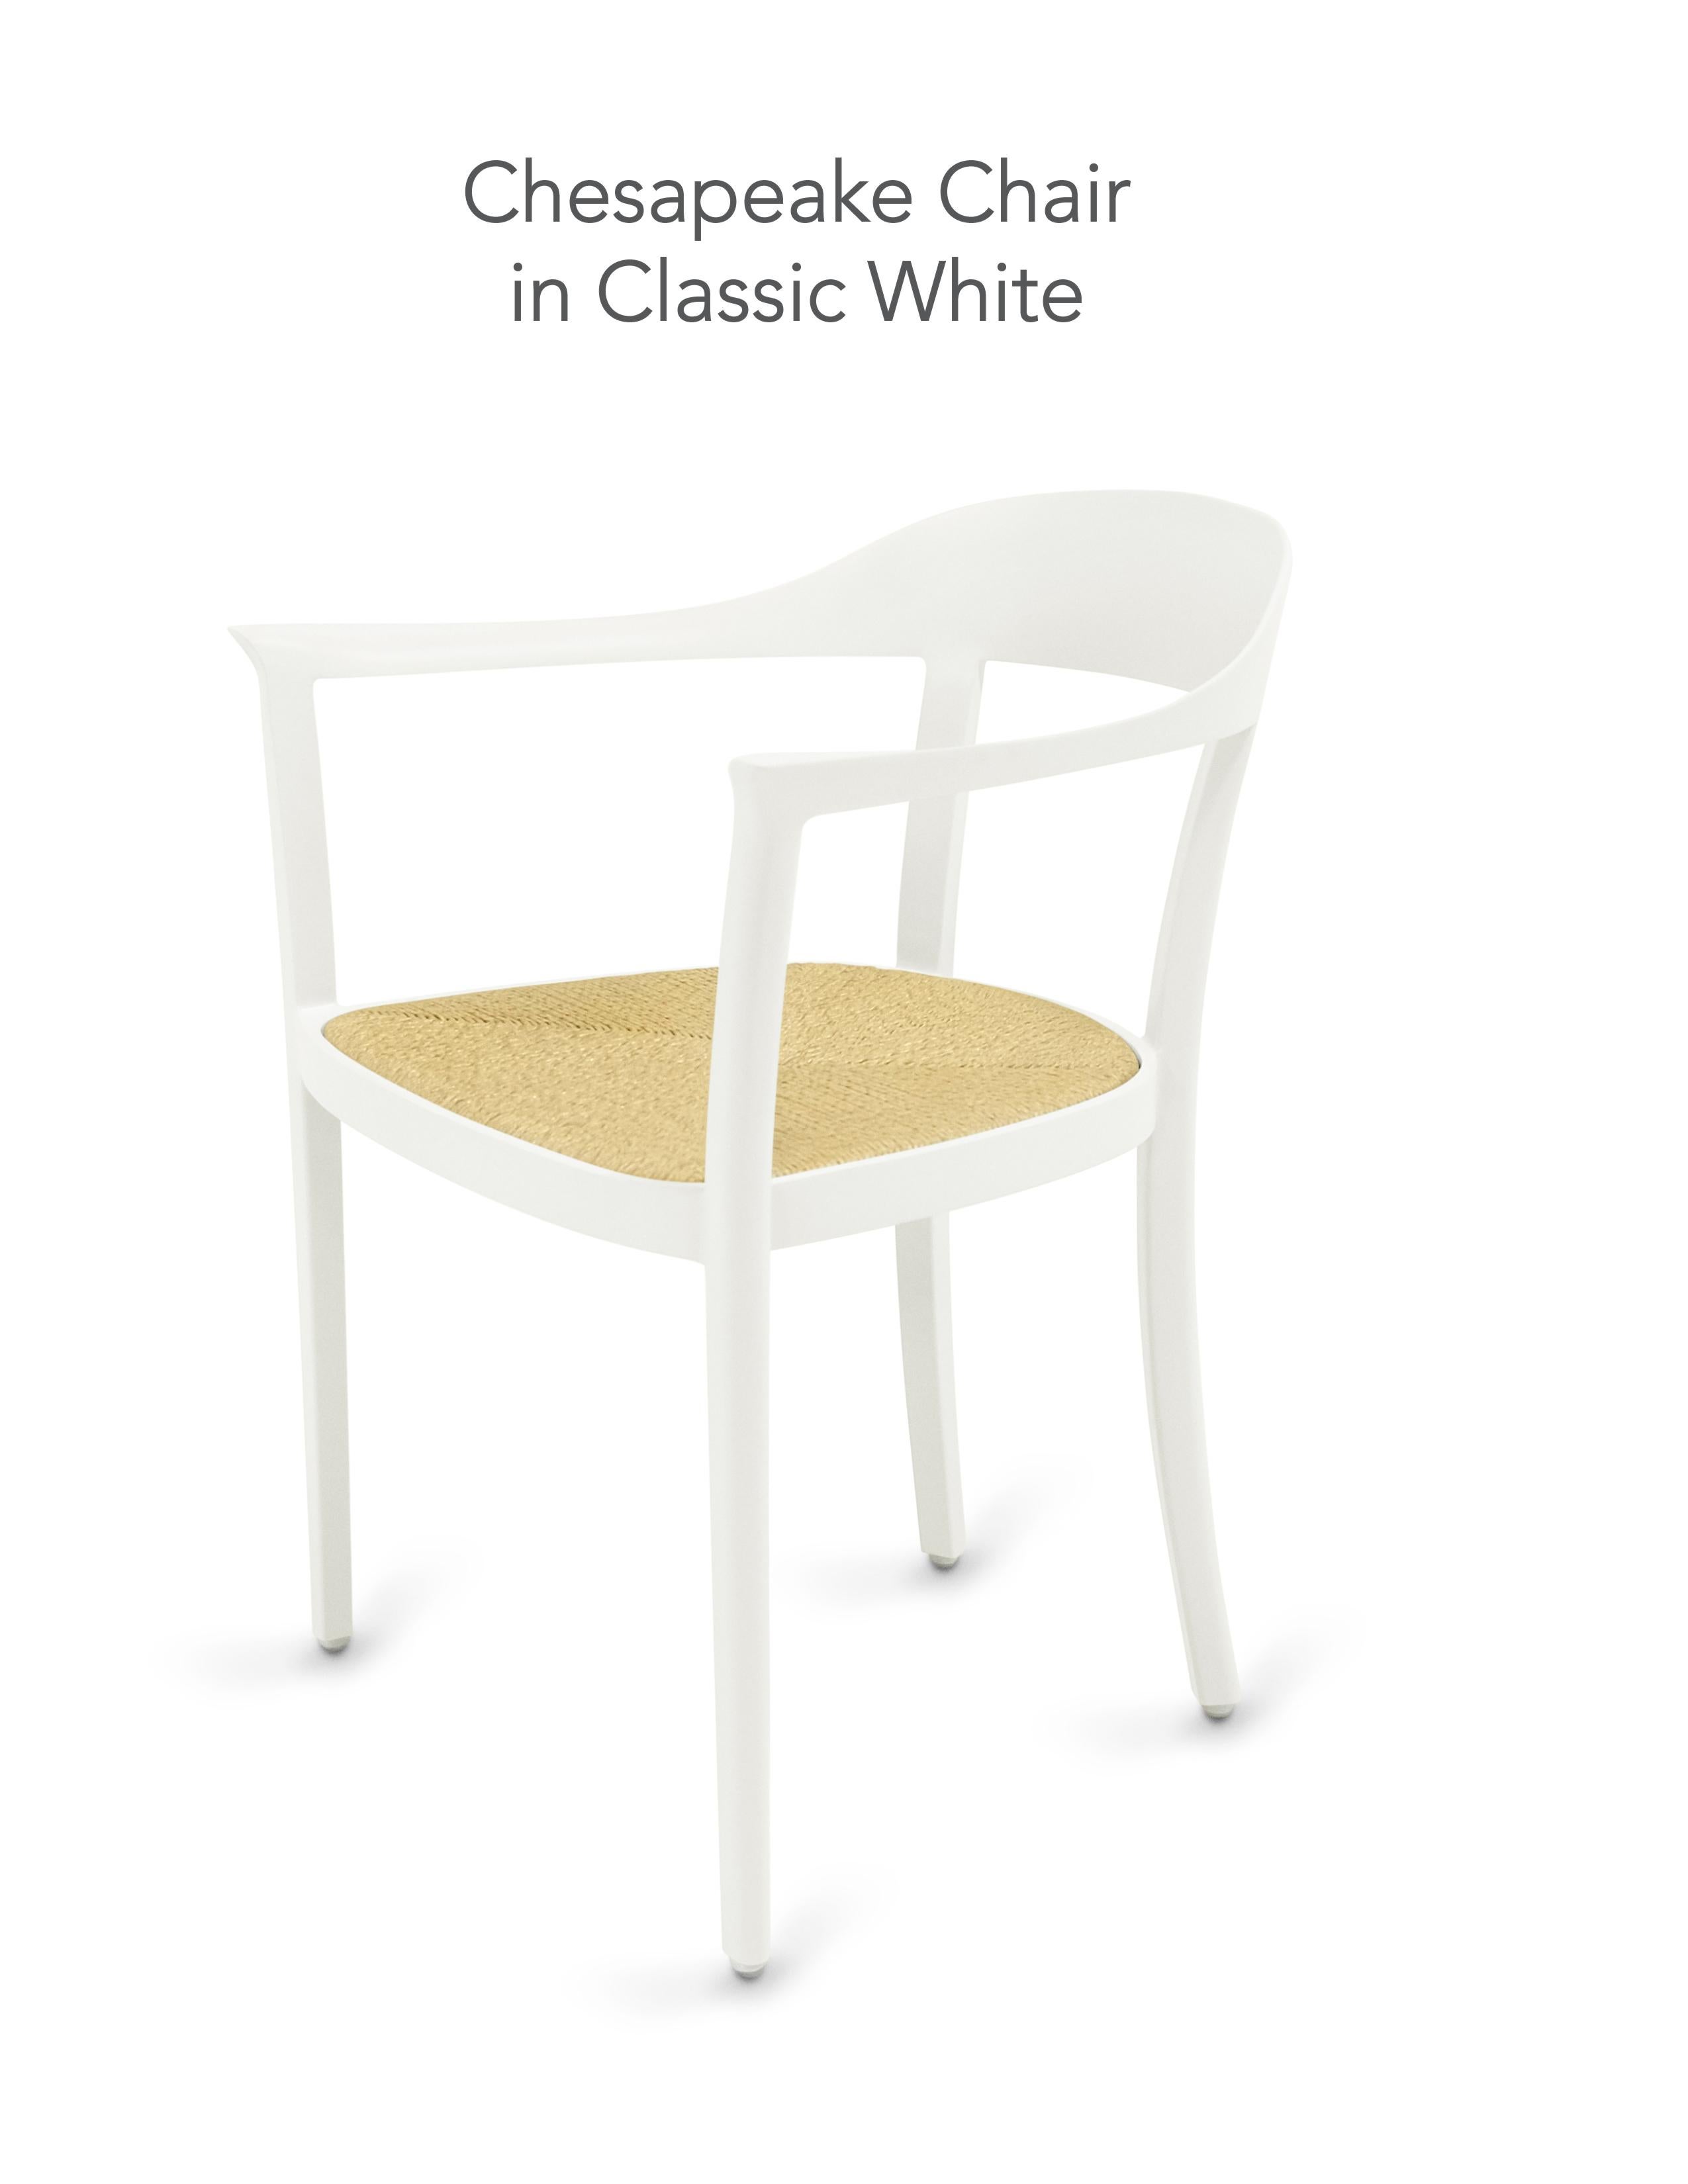 Modern Chesapeake Dining Chair, Classic White, Woven Rush, Outdoor Garden Furniture